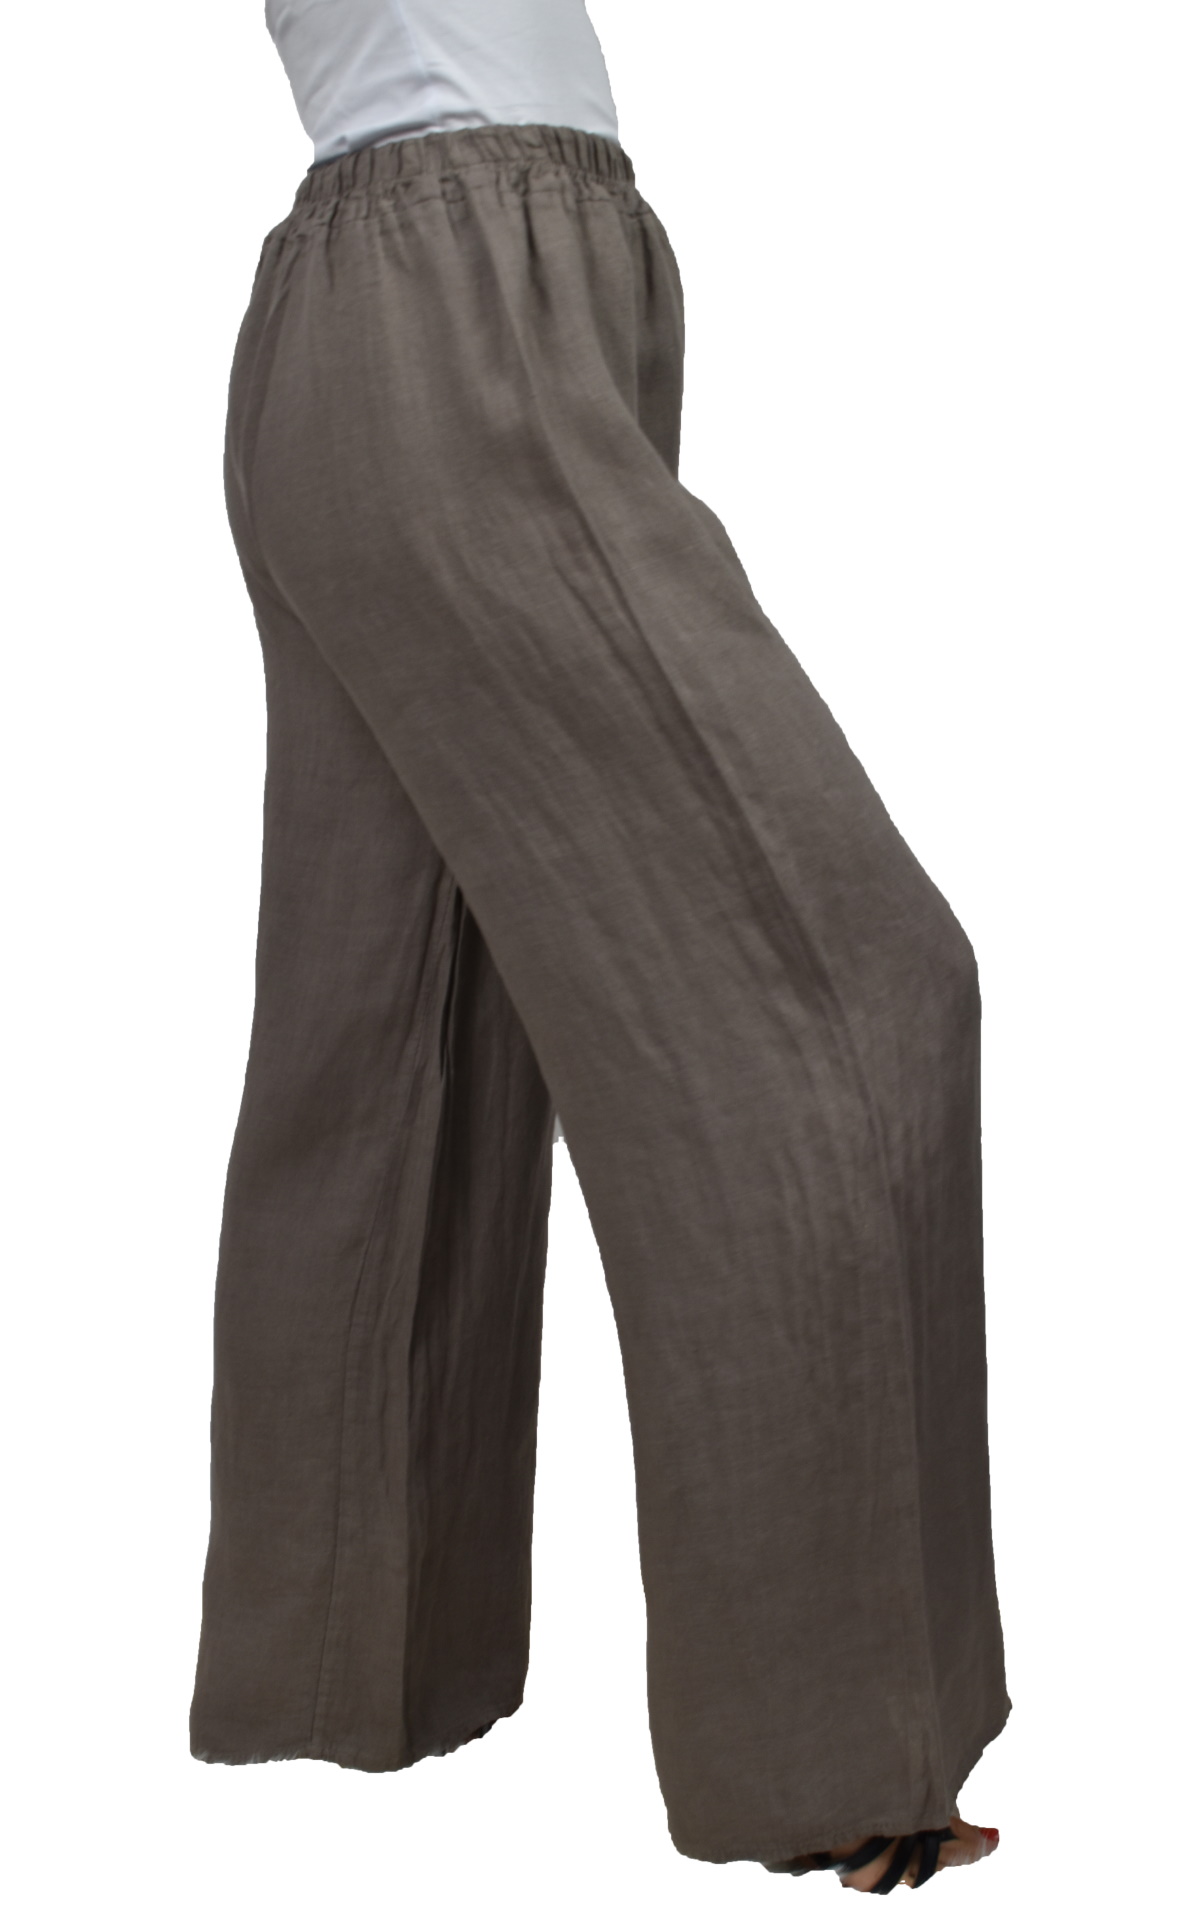 PANMAXPE2102 FANGO PANTALONE DA DONNA A GAMBA LARGA 100 LINO 3 1stAmerican pantalone da donna a gamba larga 100% lino Made in Italy - pantalone mare donna